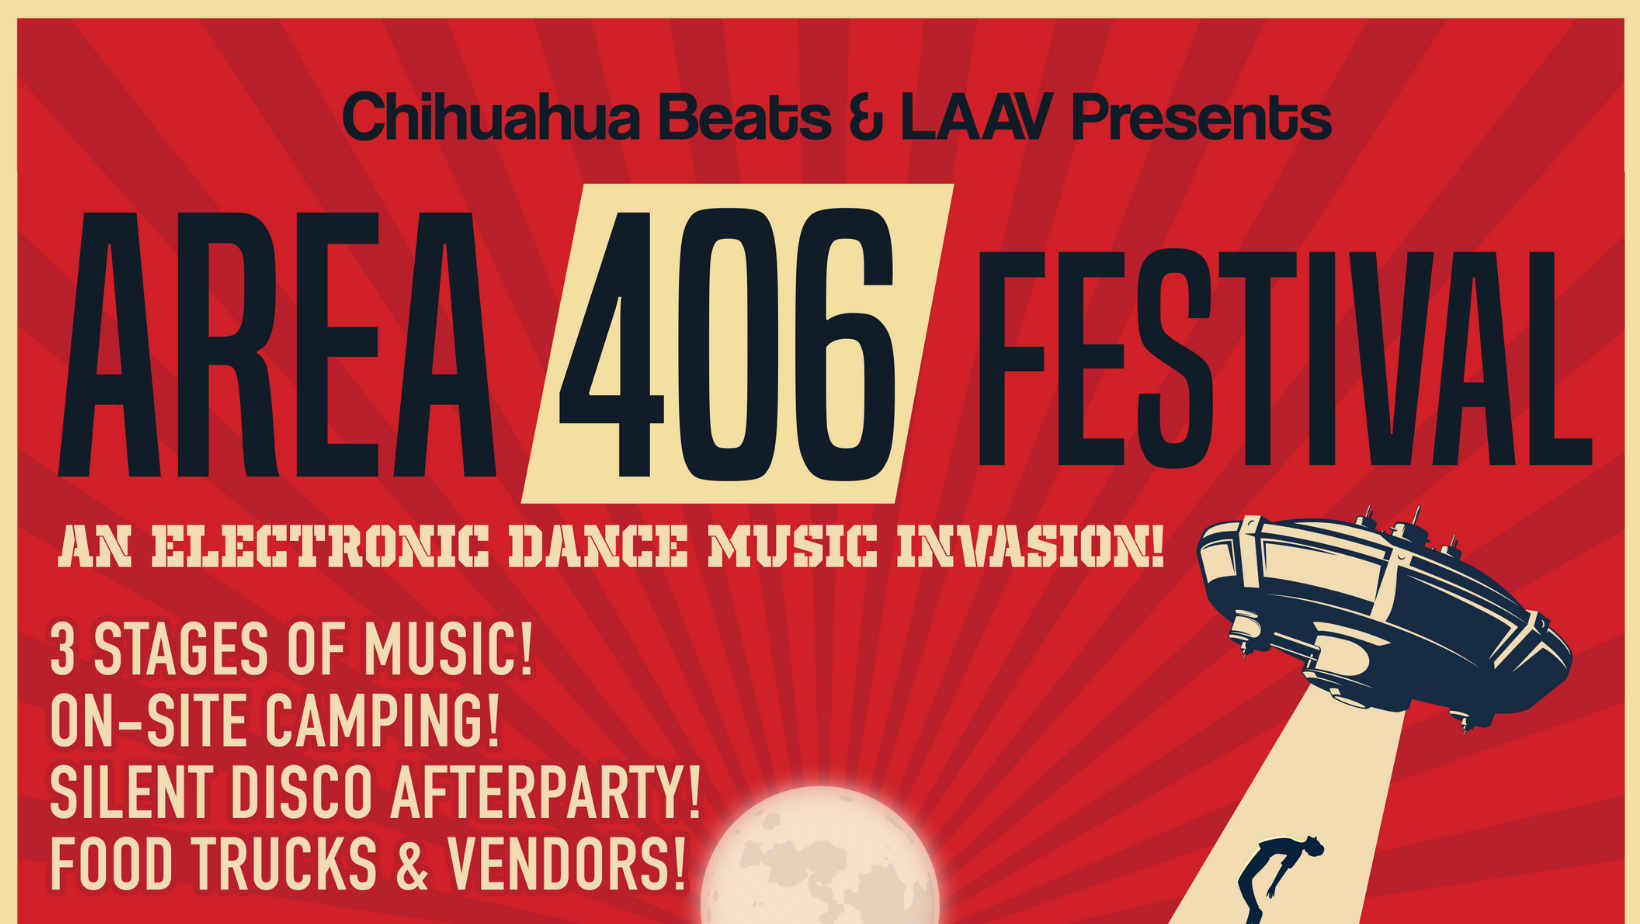 Area 406 Festival